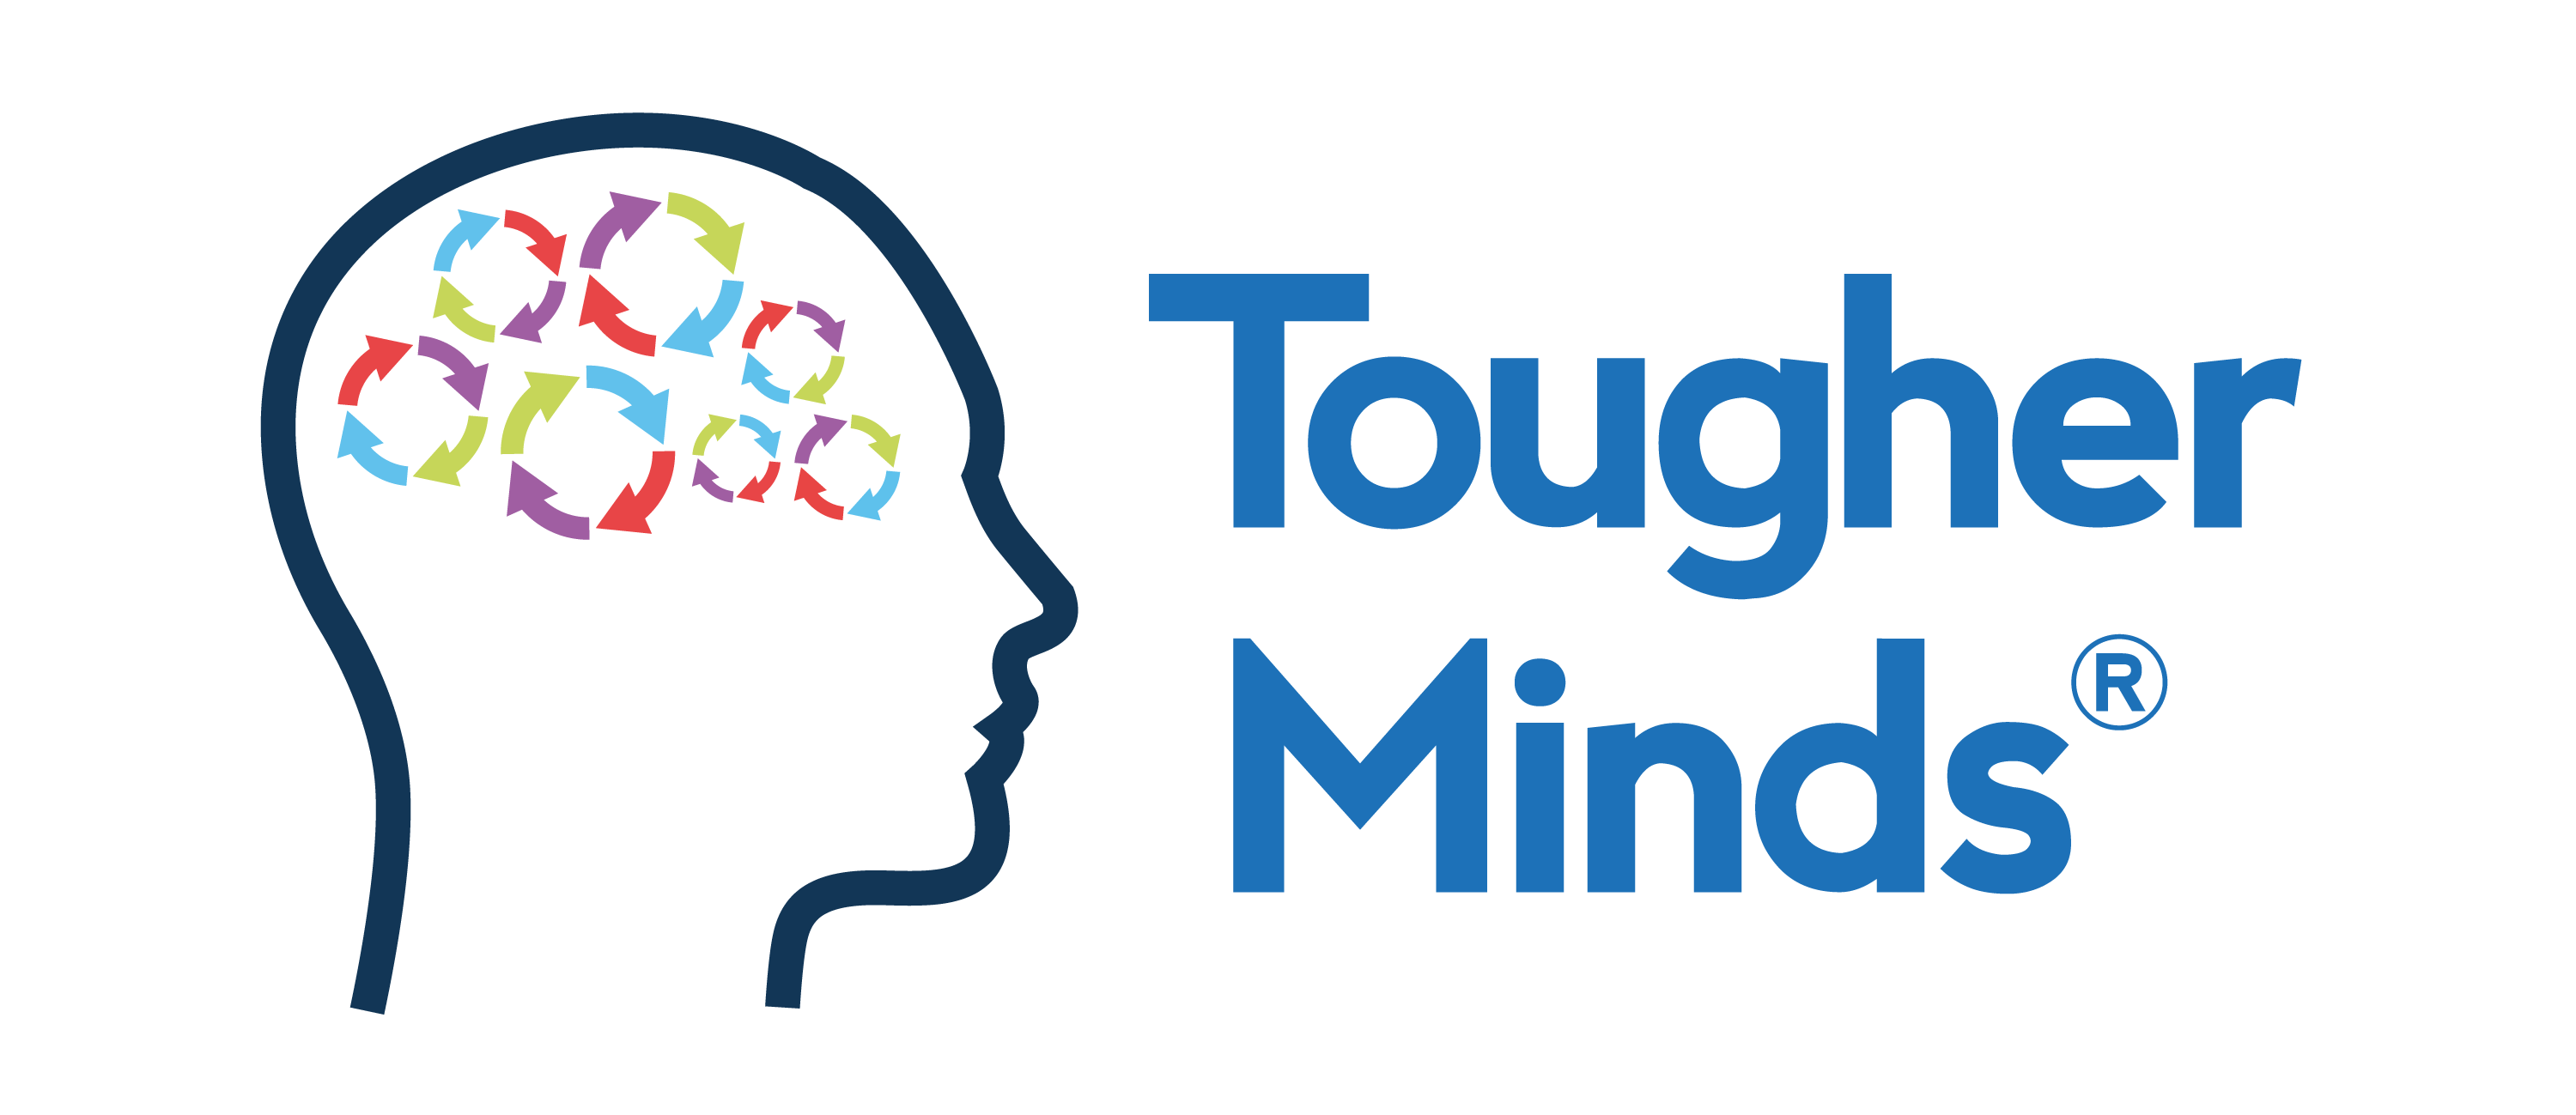 TougherMinds logo headonly